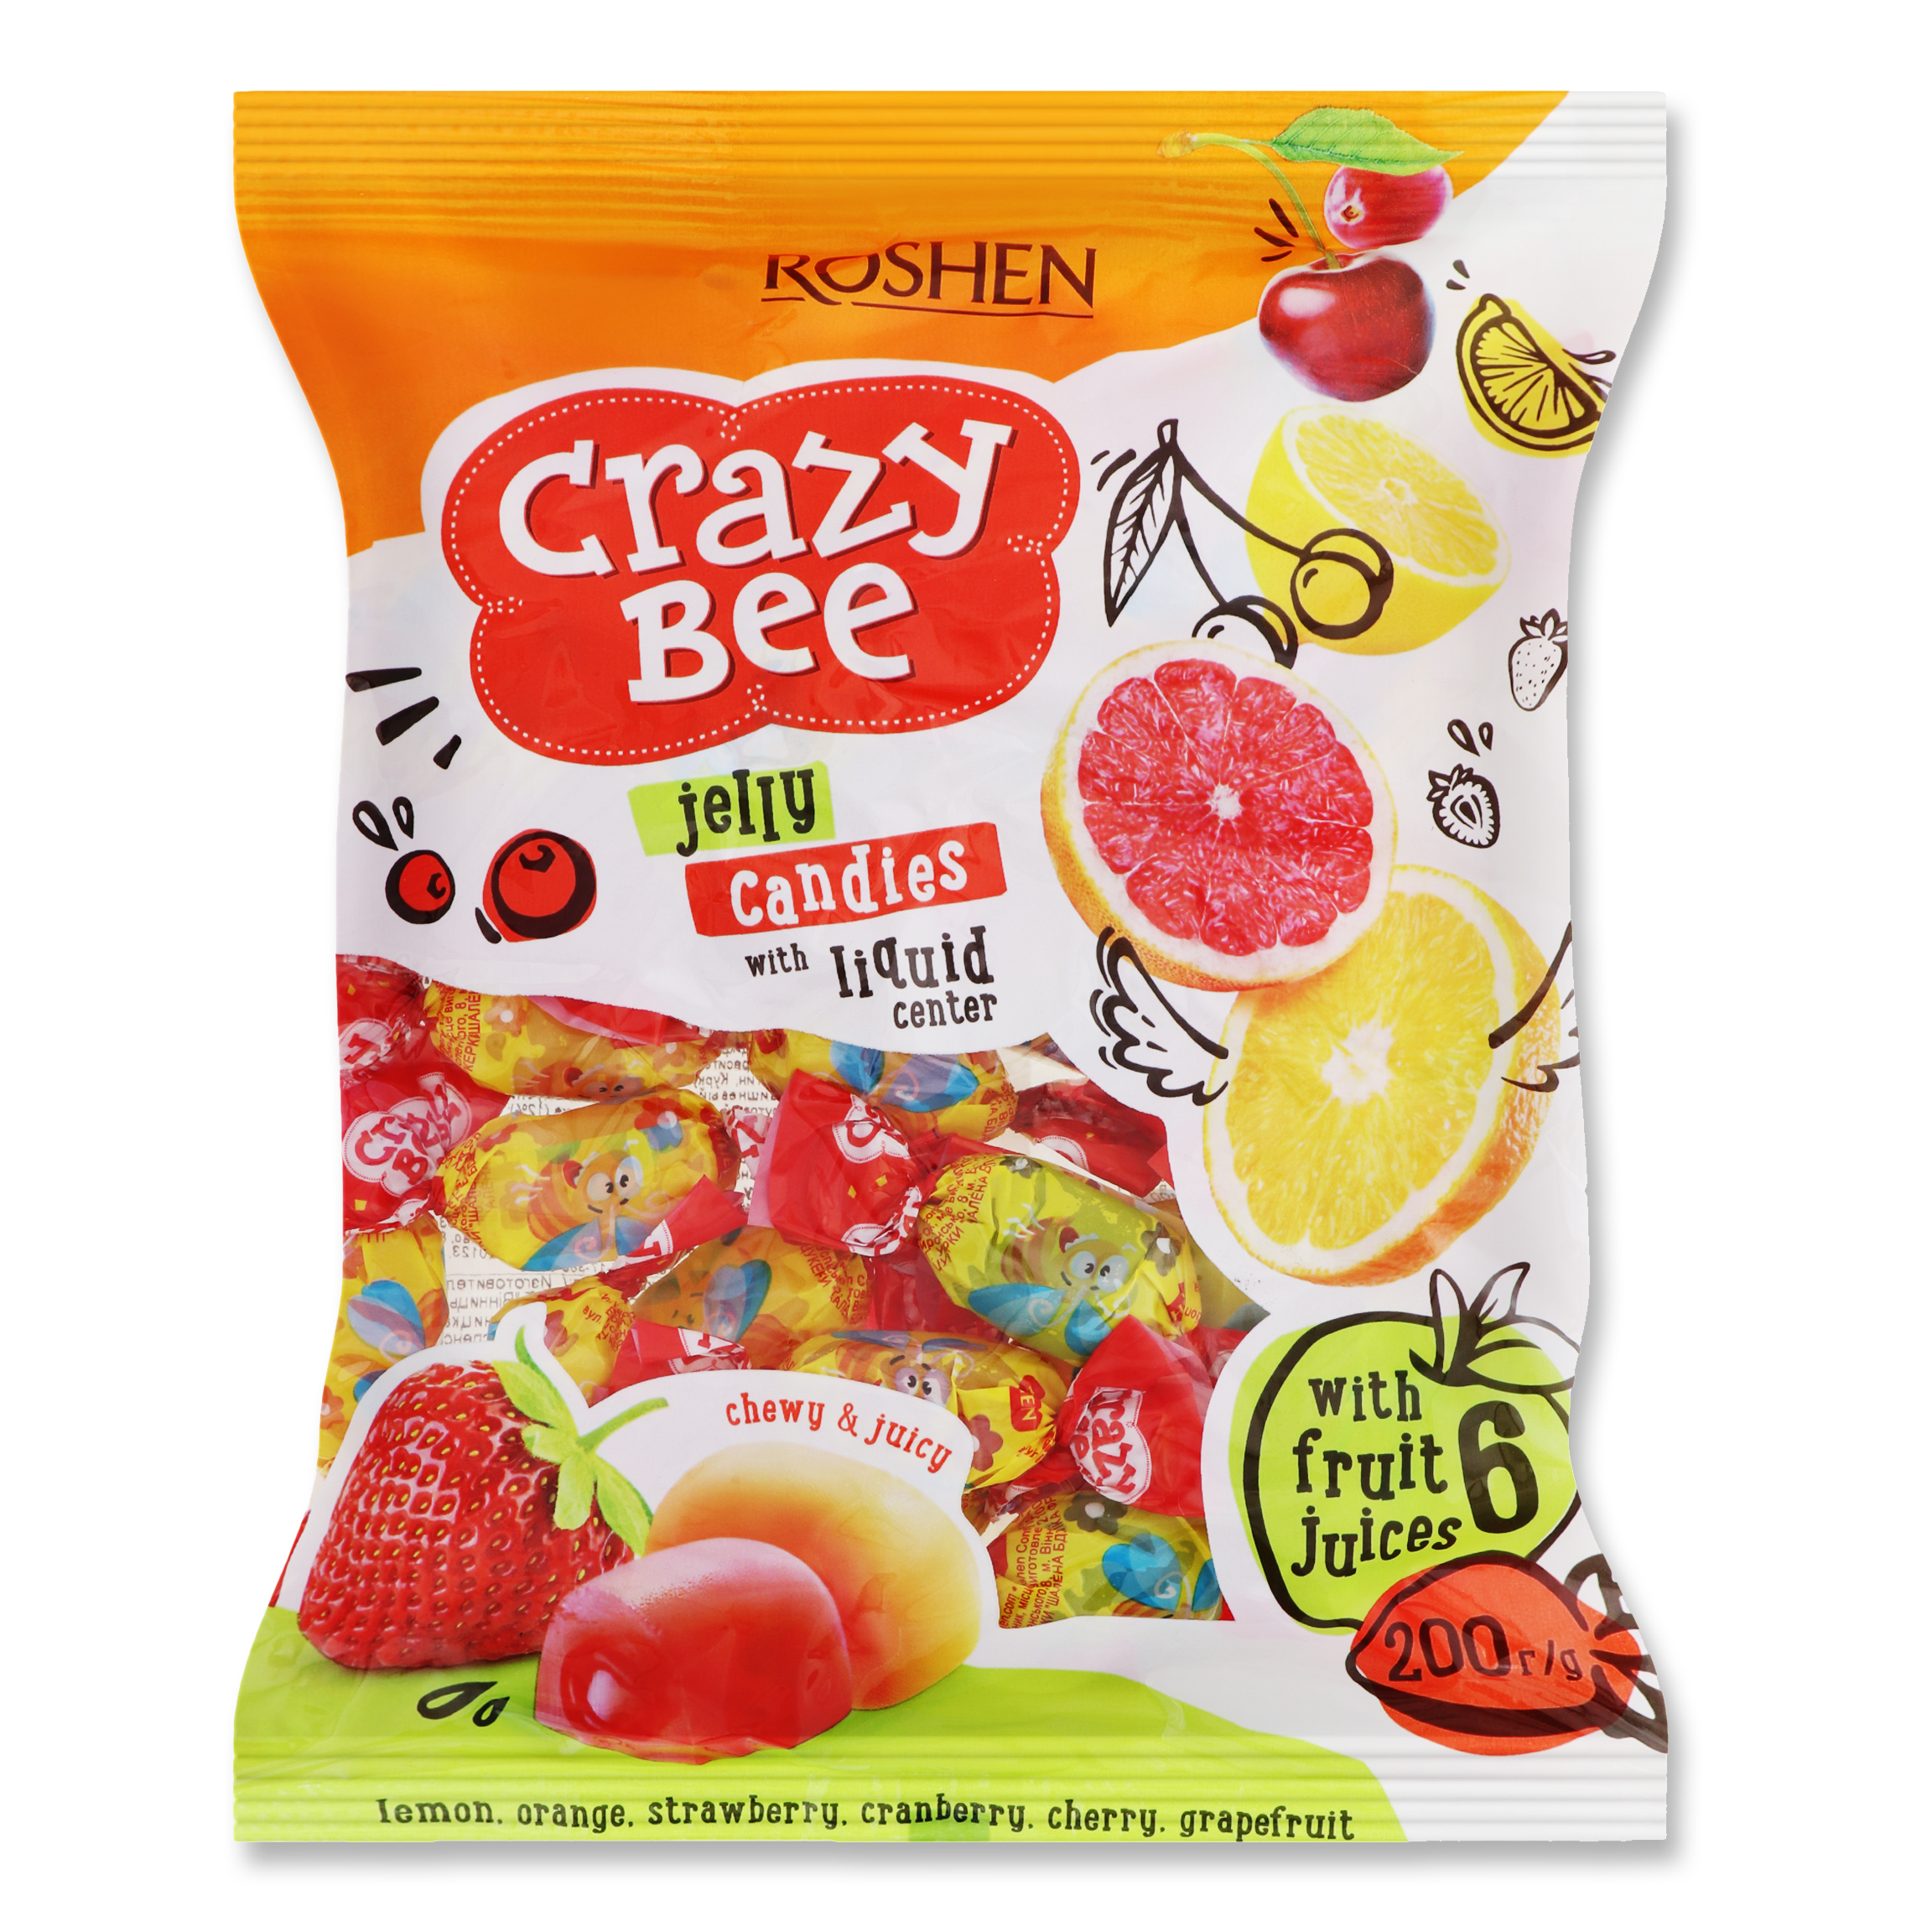 Roshen Crazy Bee Candy 200g